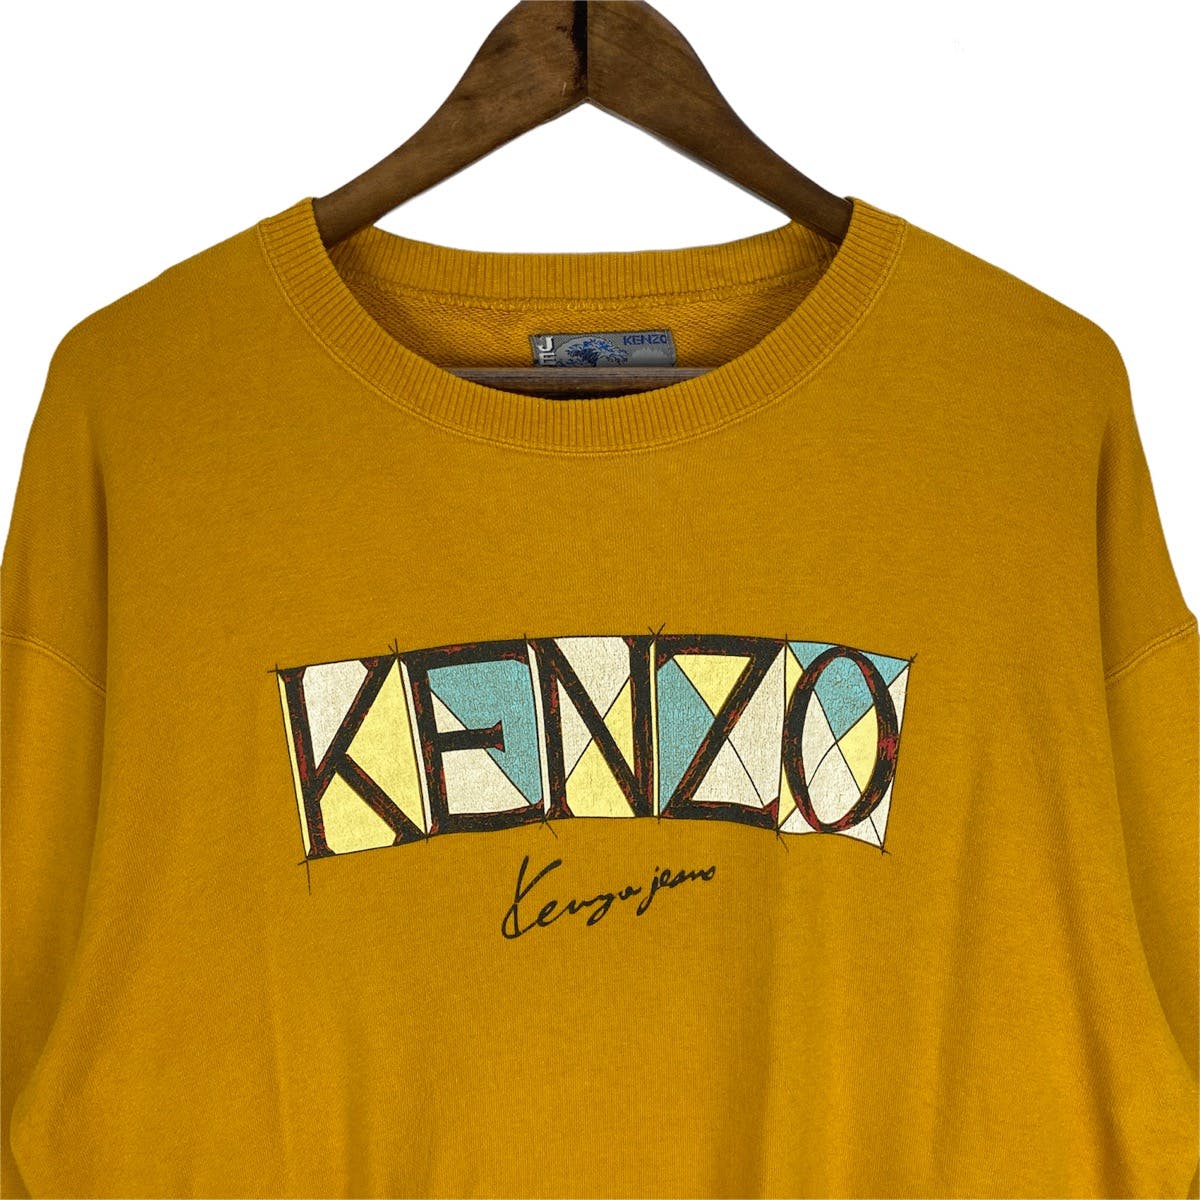 Vintage Kenzo Jeans Sweatshirt Crewneck - 5